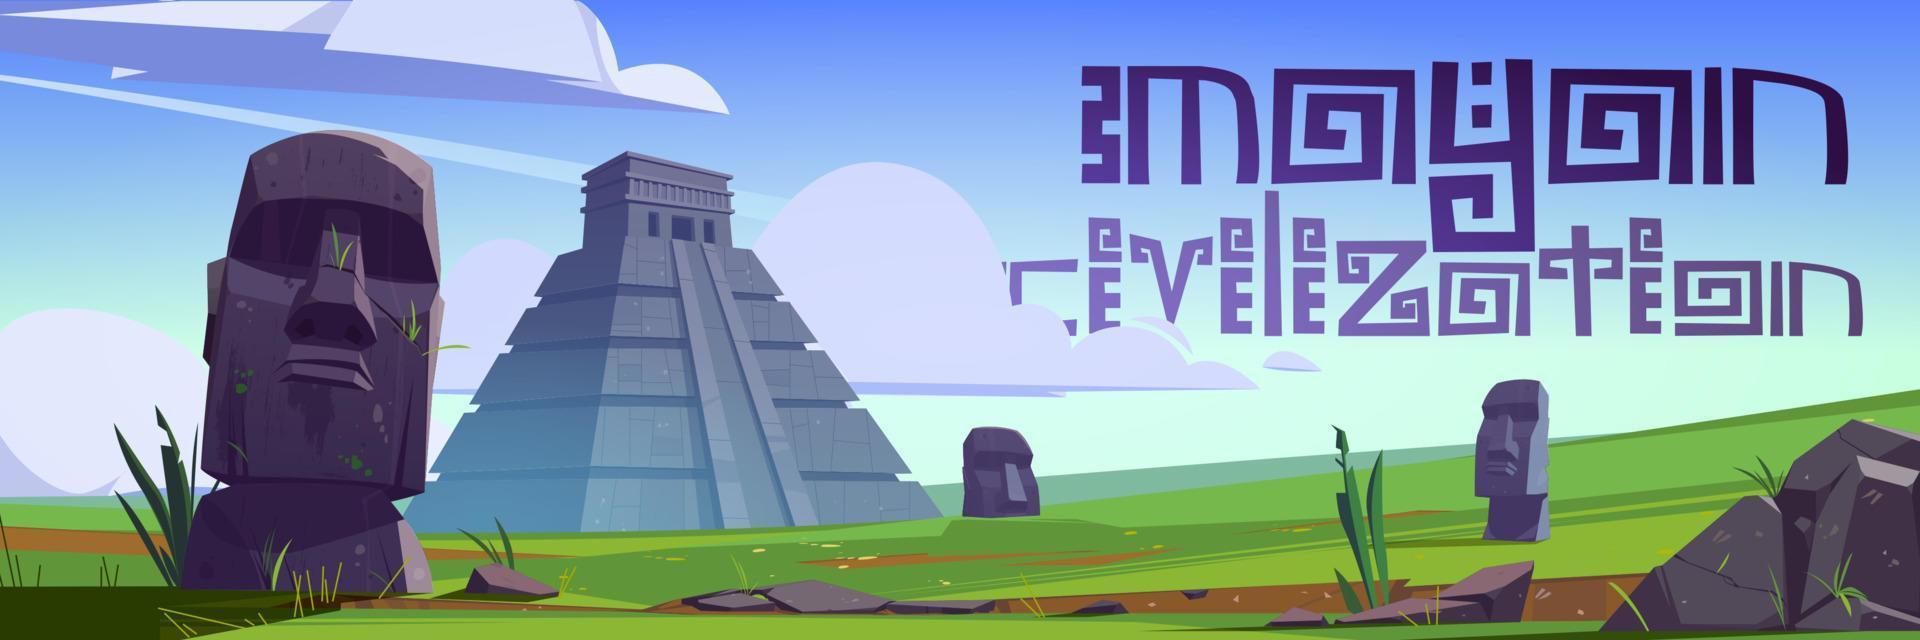 Mayan civilization landmarks and moai statues vector